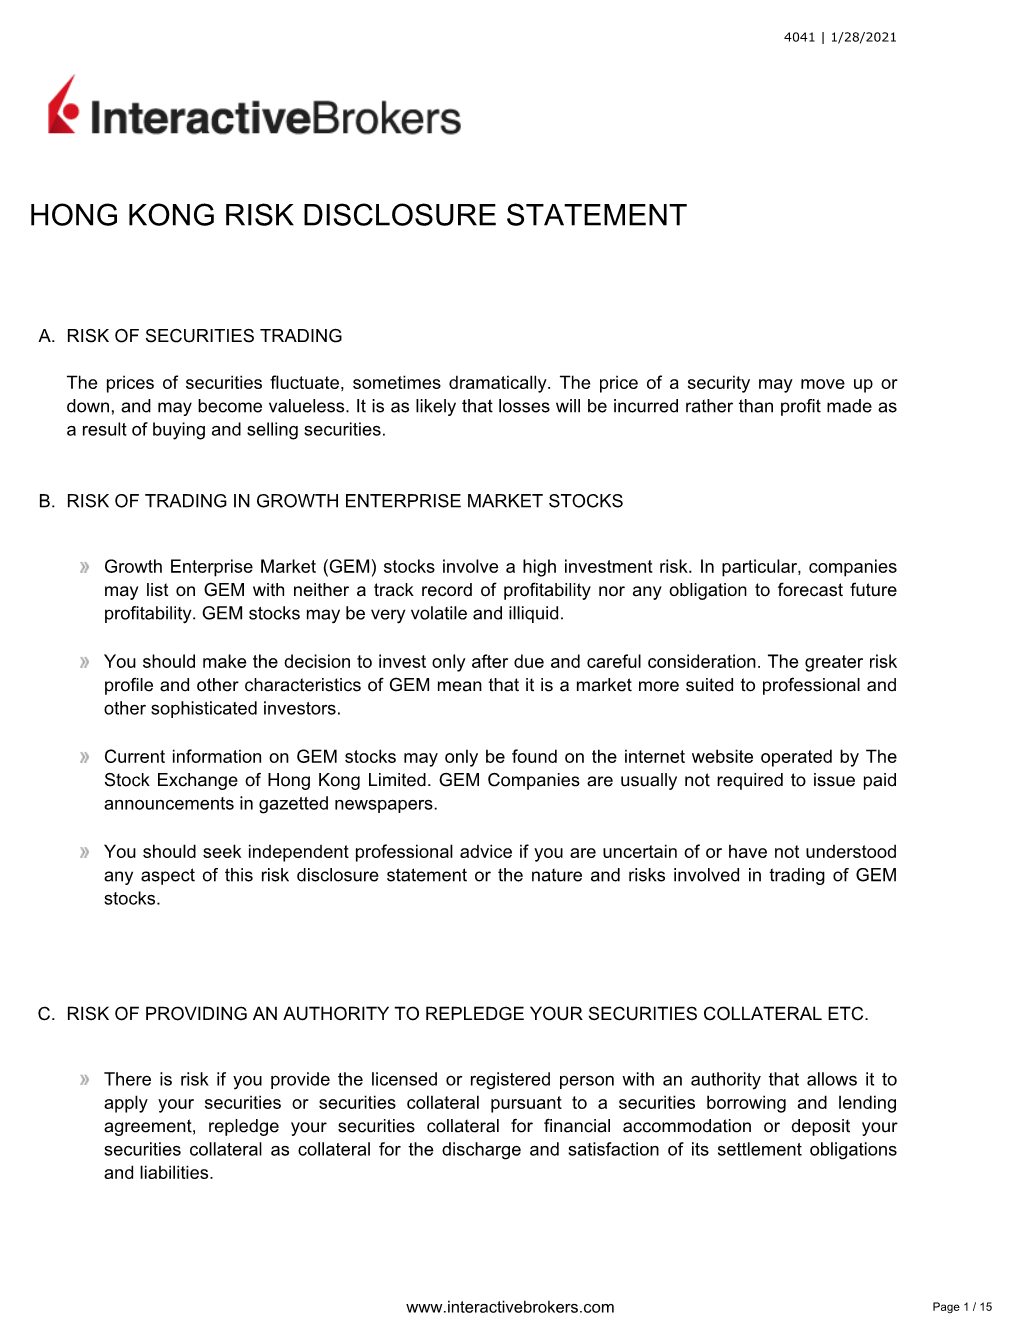 Hong Kong Risk Disclosure Statement